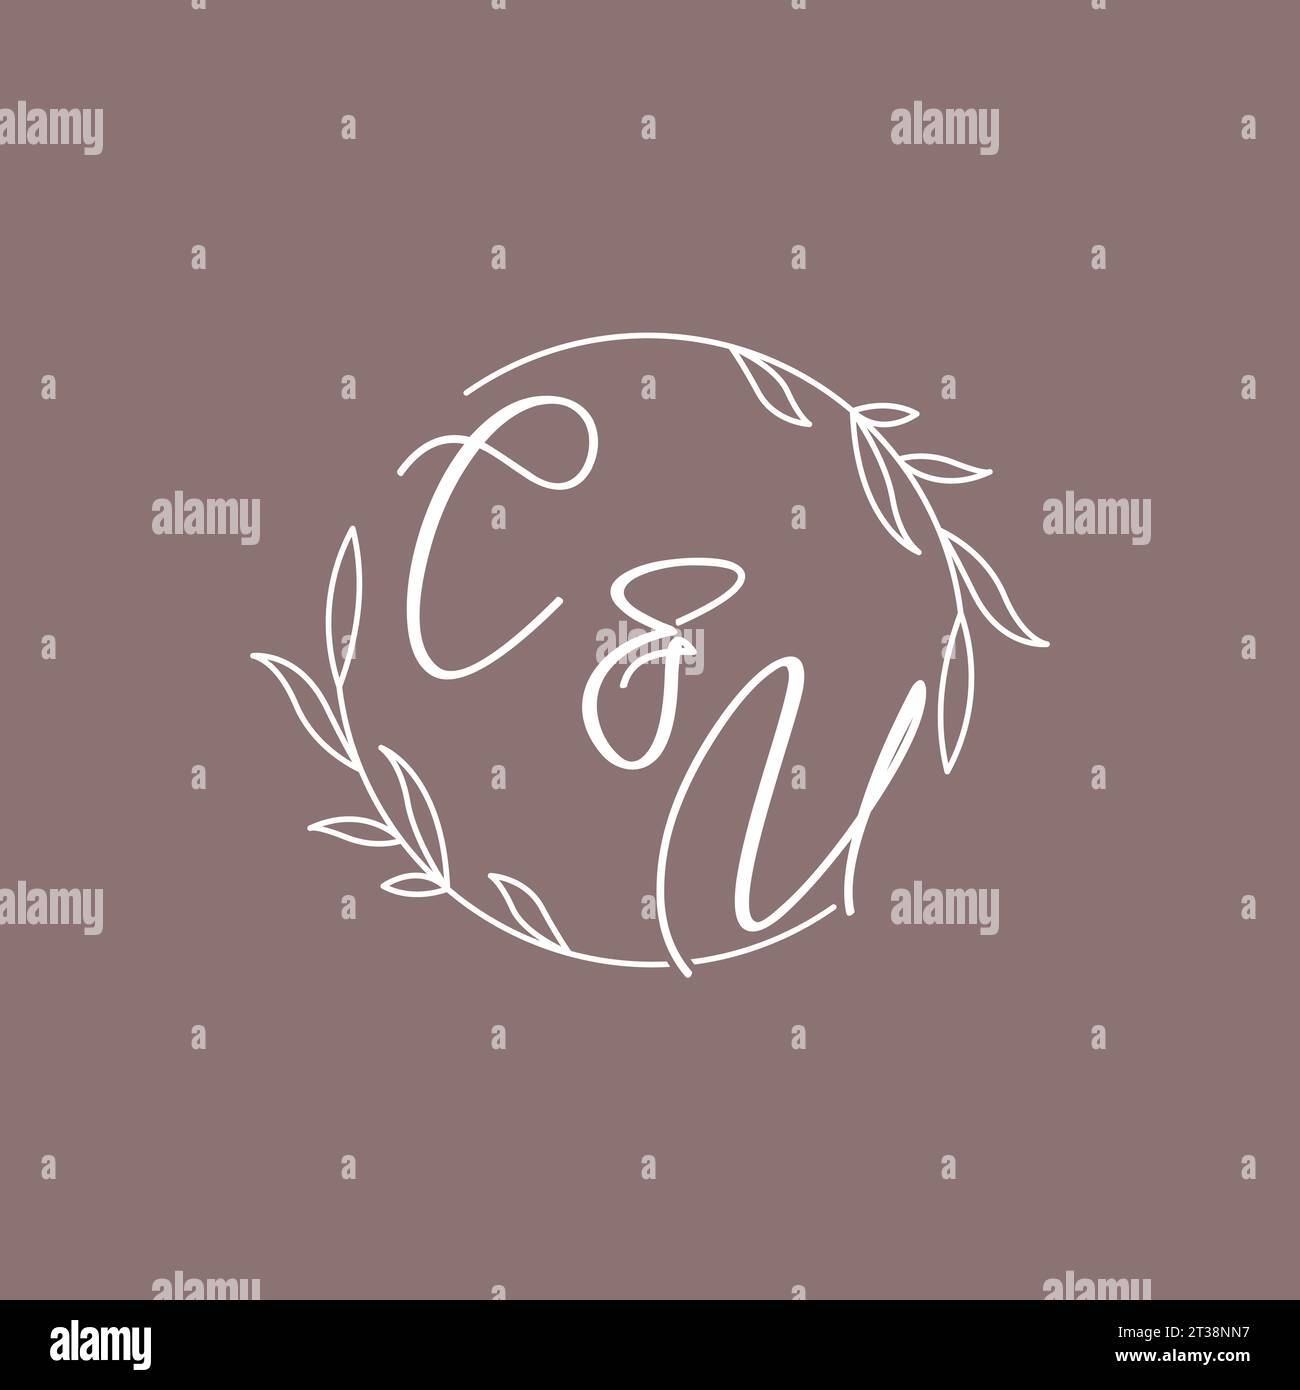 CU wedding initials monogram logo ideas vector graphic Stock Vector